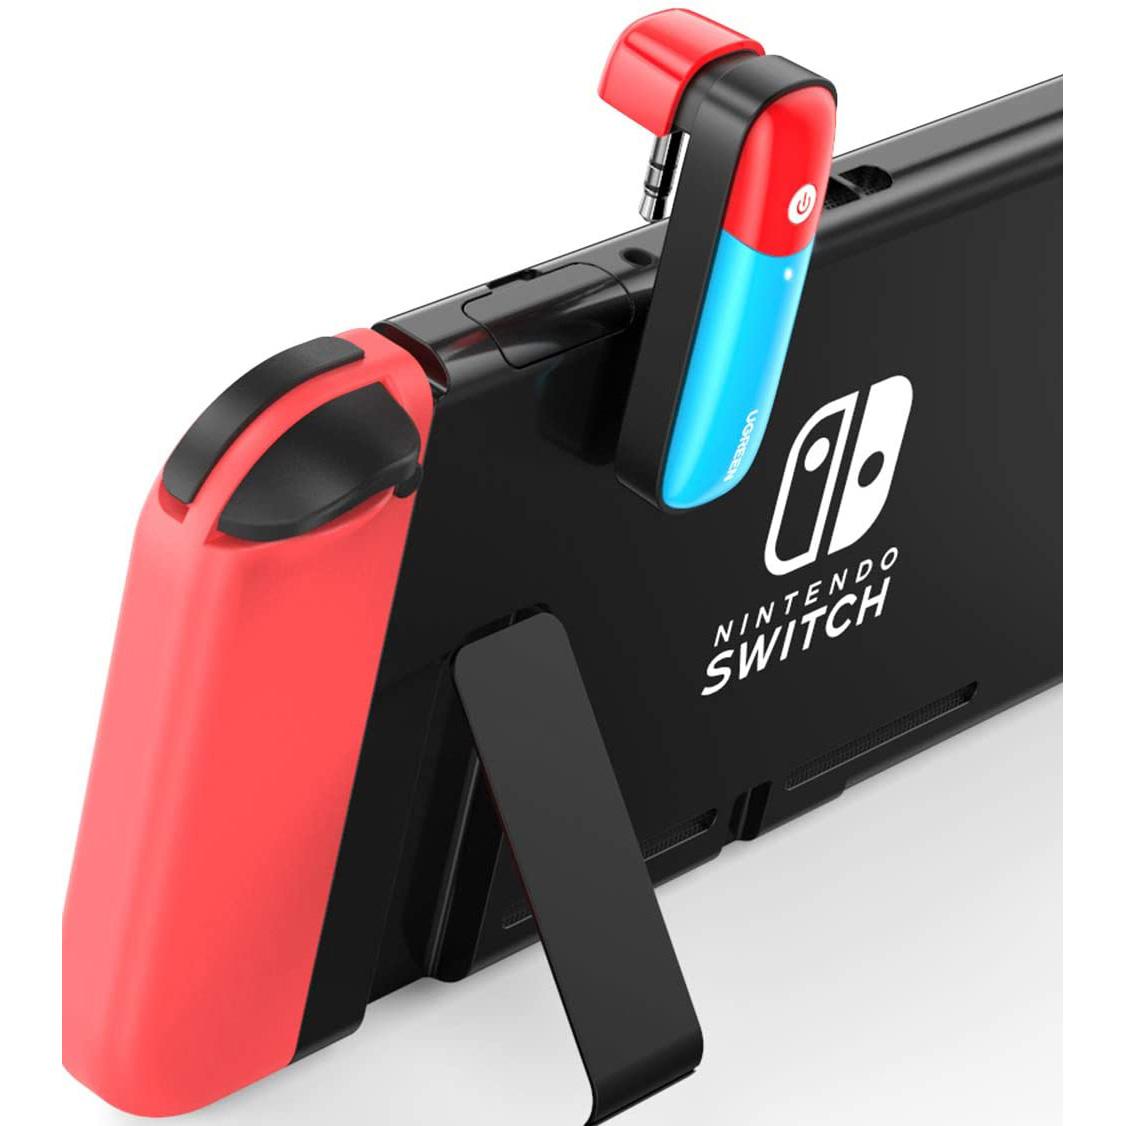 Nintendo Switch Bluetooth 5 aptX Audio Adapter for $17.54